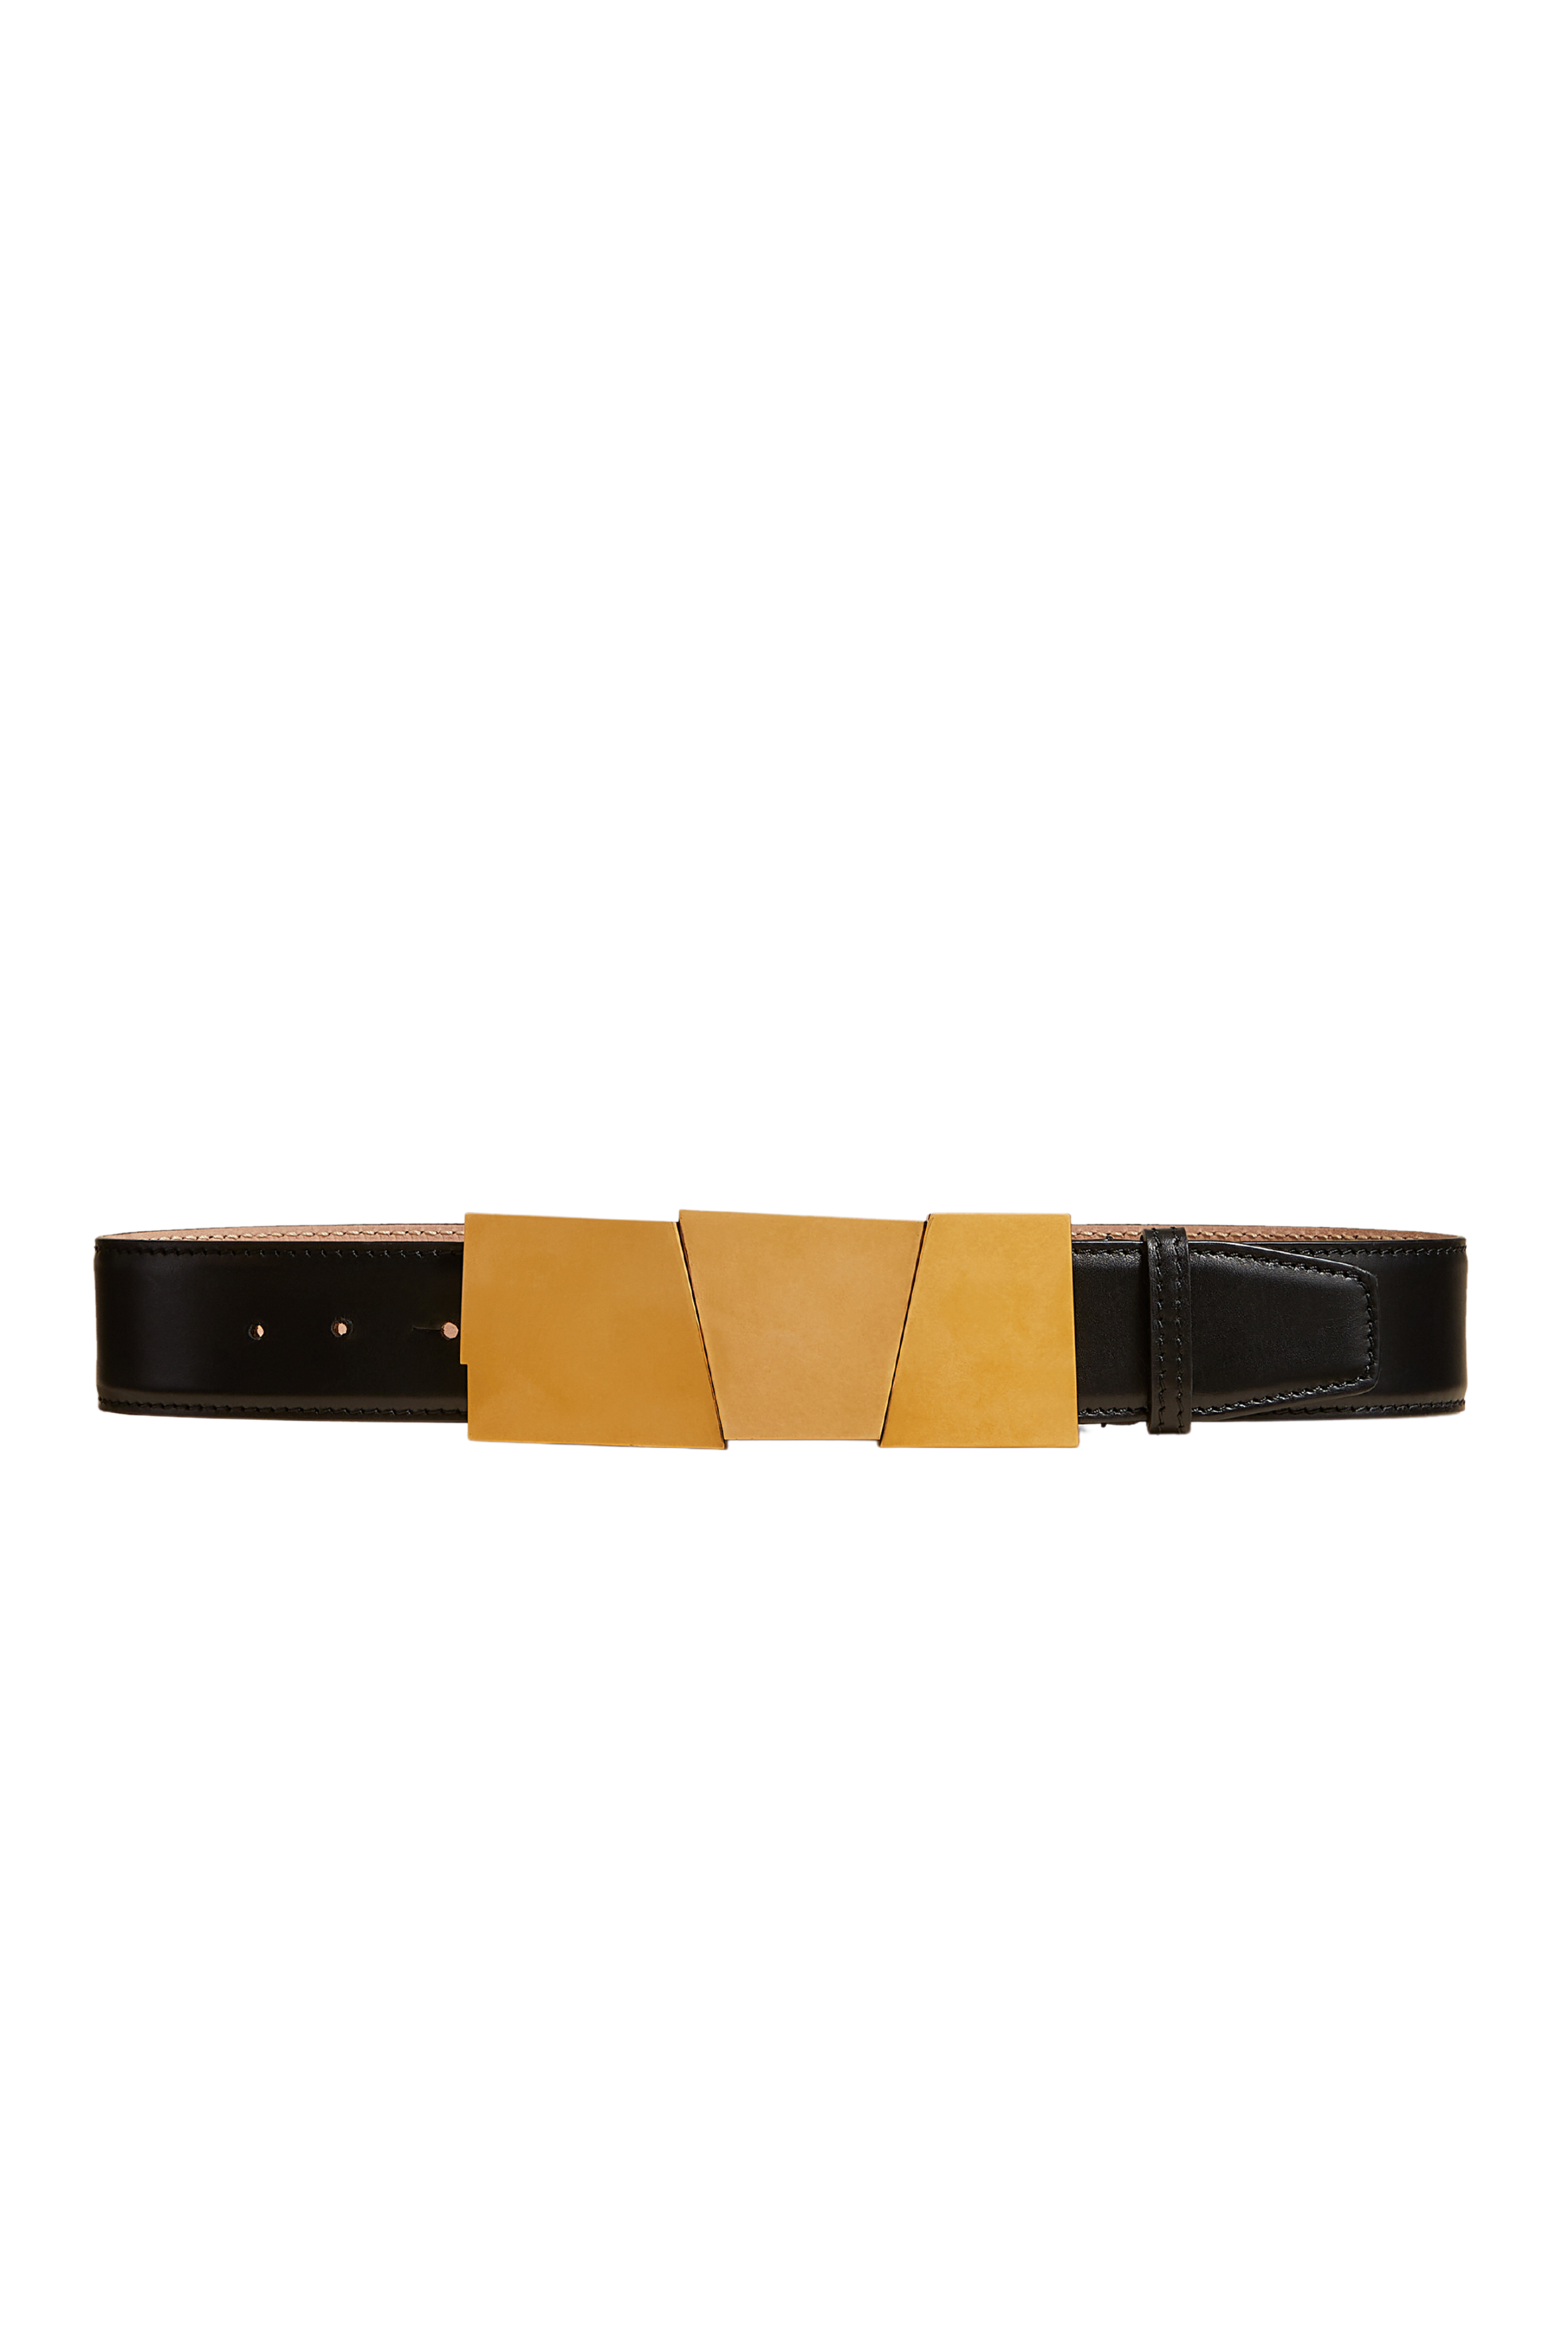 KHAITE Axel Gold Leather Belt